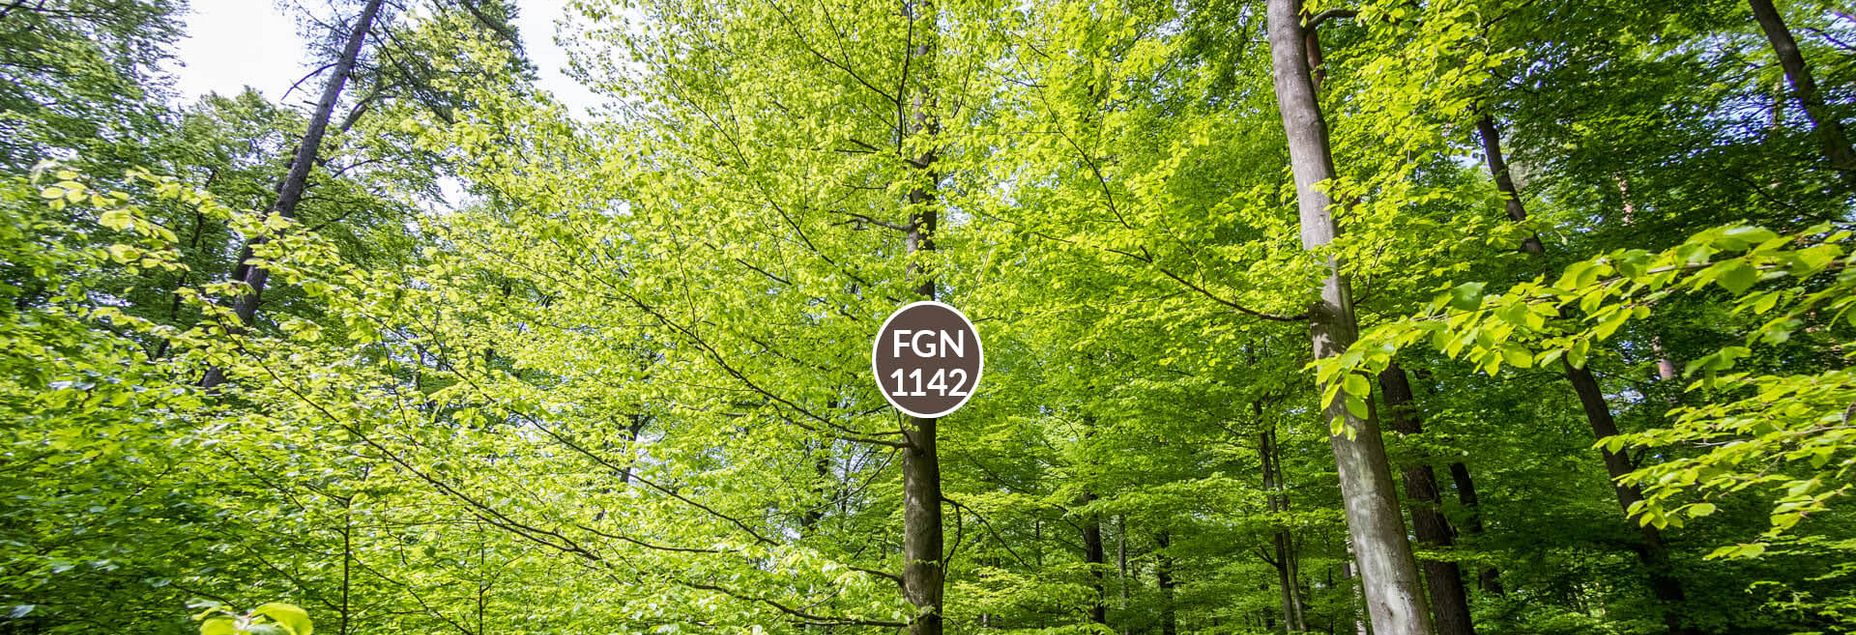 Baum FGN 1142 - Fisheyeperspektive